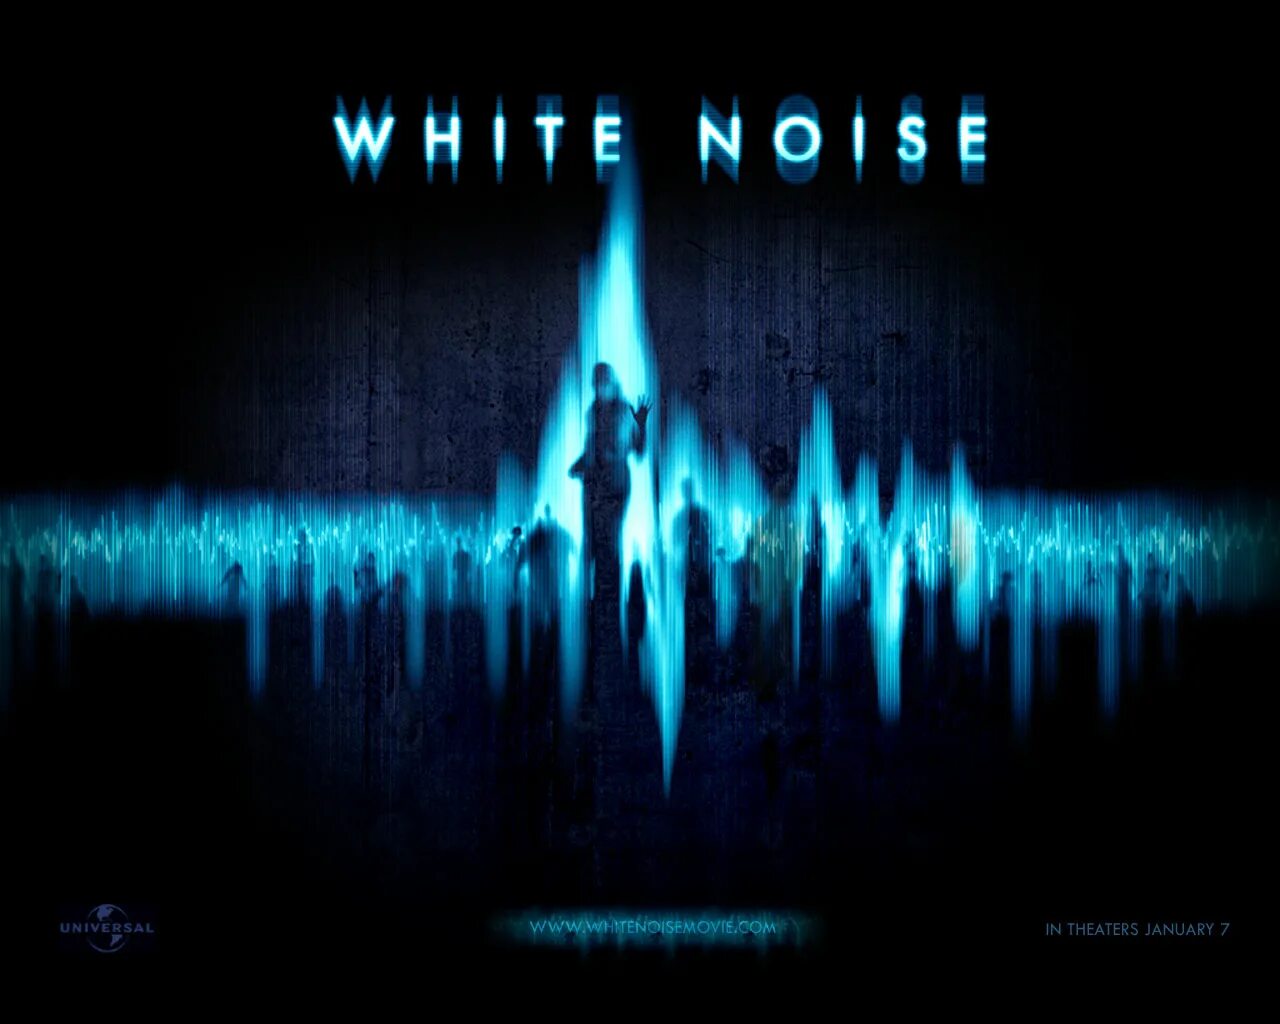 Белый шум. Белый шум помехи. Белый шум картинка. Белый шум звук. Белый шум слушать без остановки